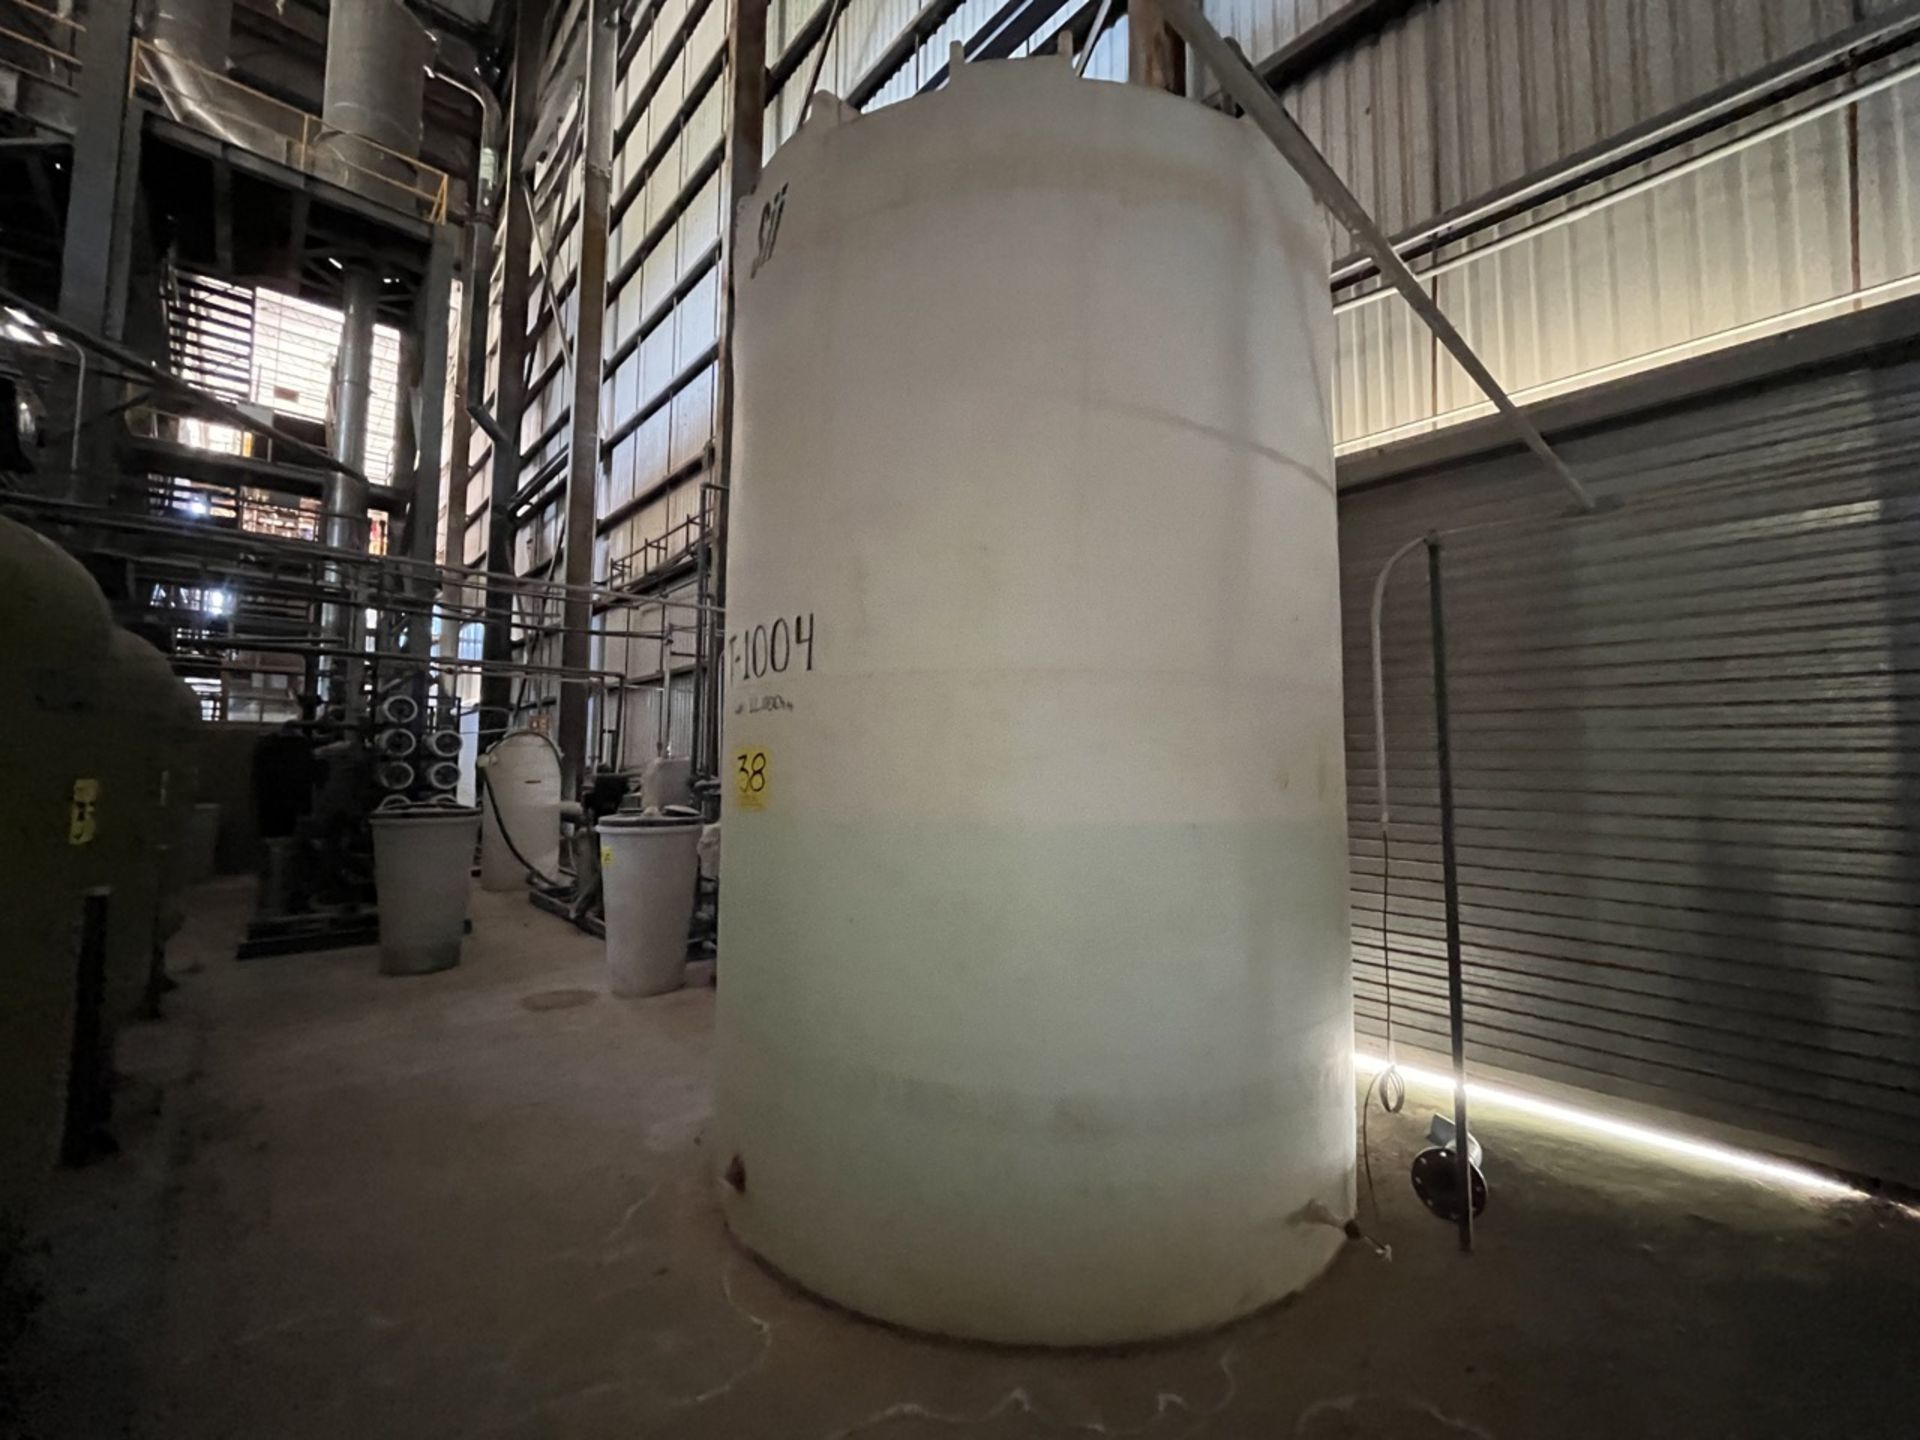 Plastic water storage tank with a capacity of 12,000 liters measuring approx 2.40 meters diameter x